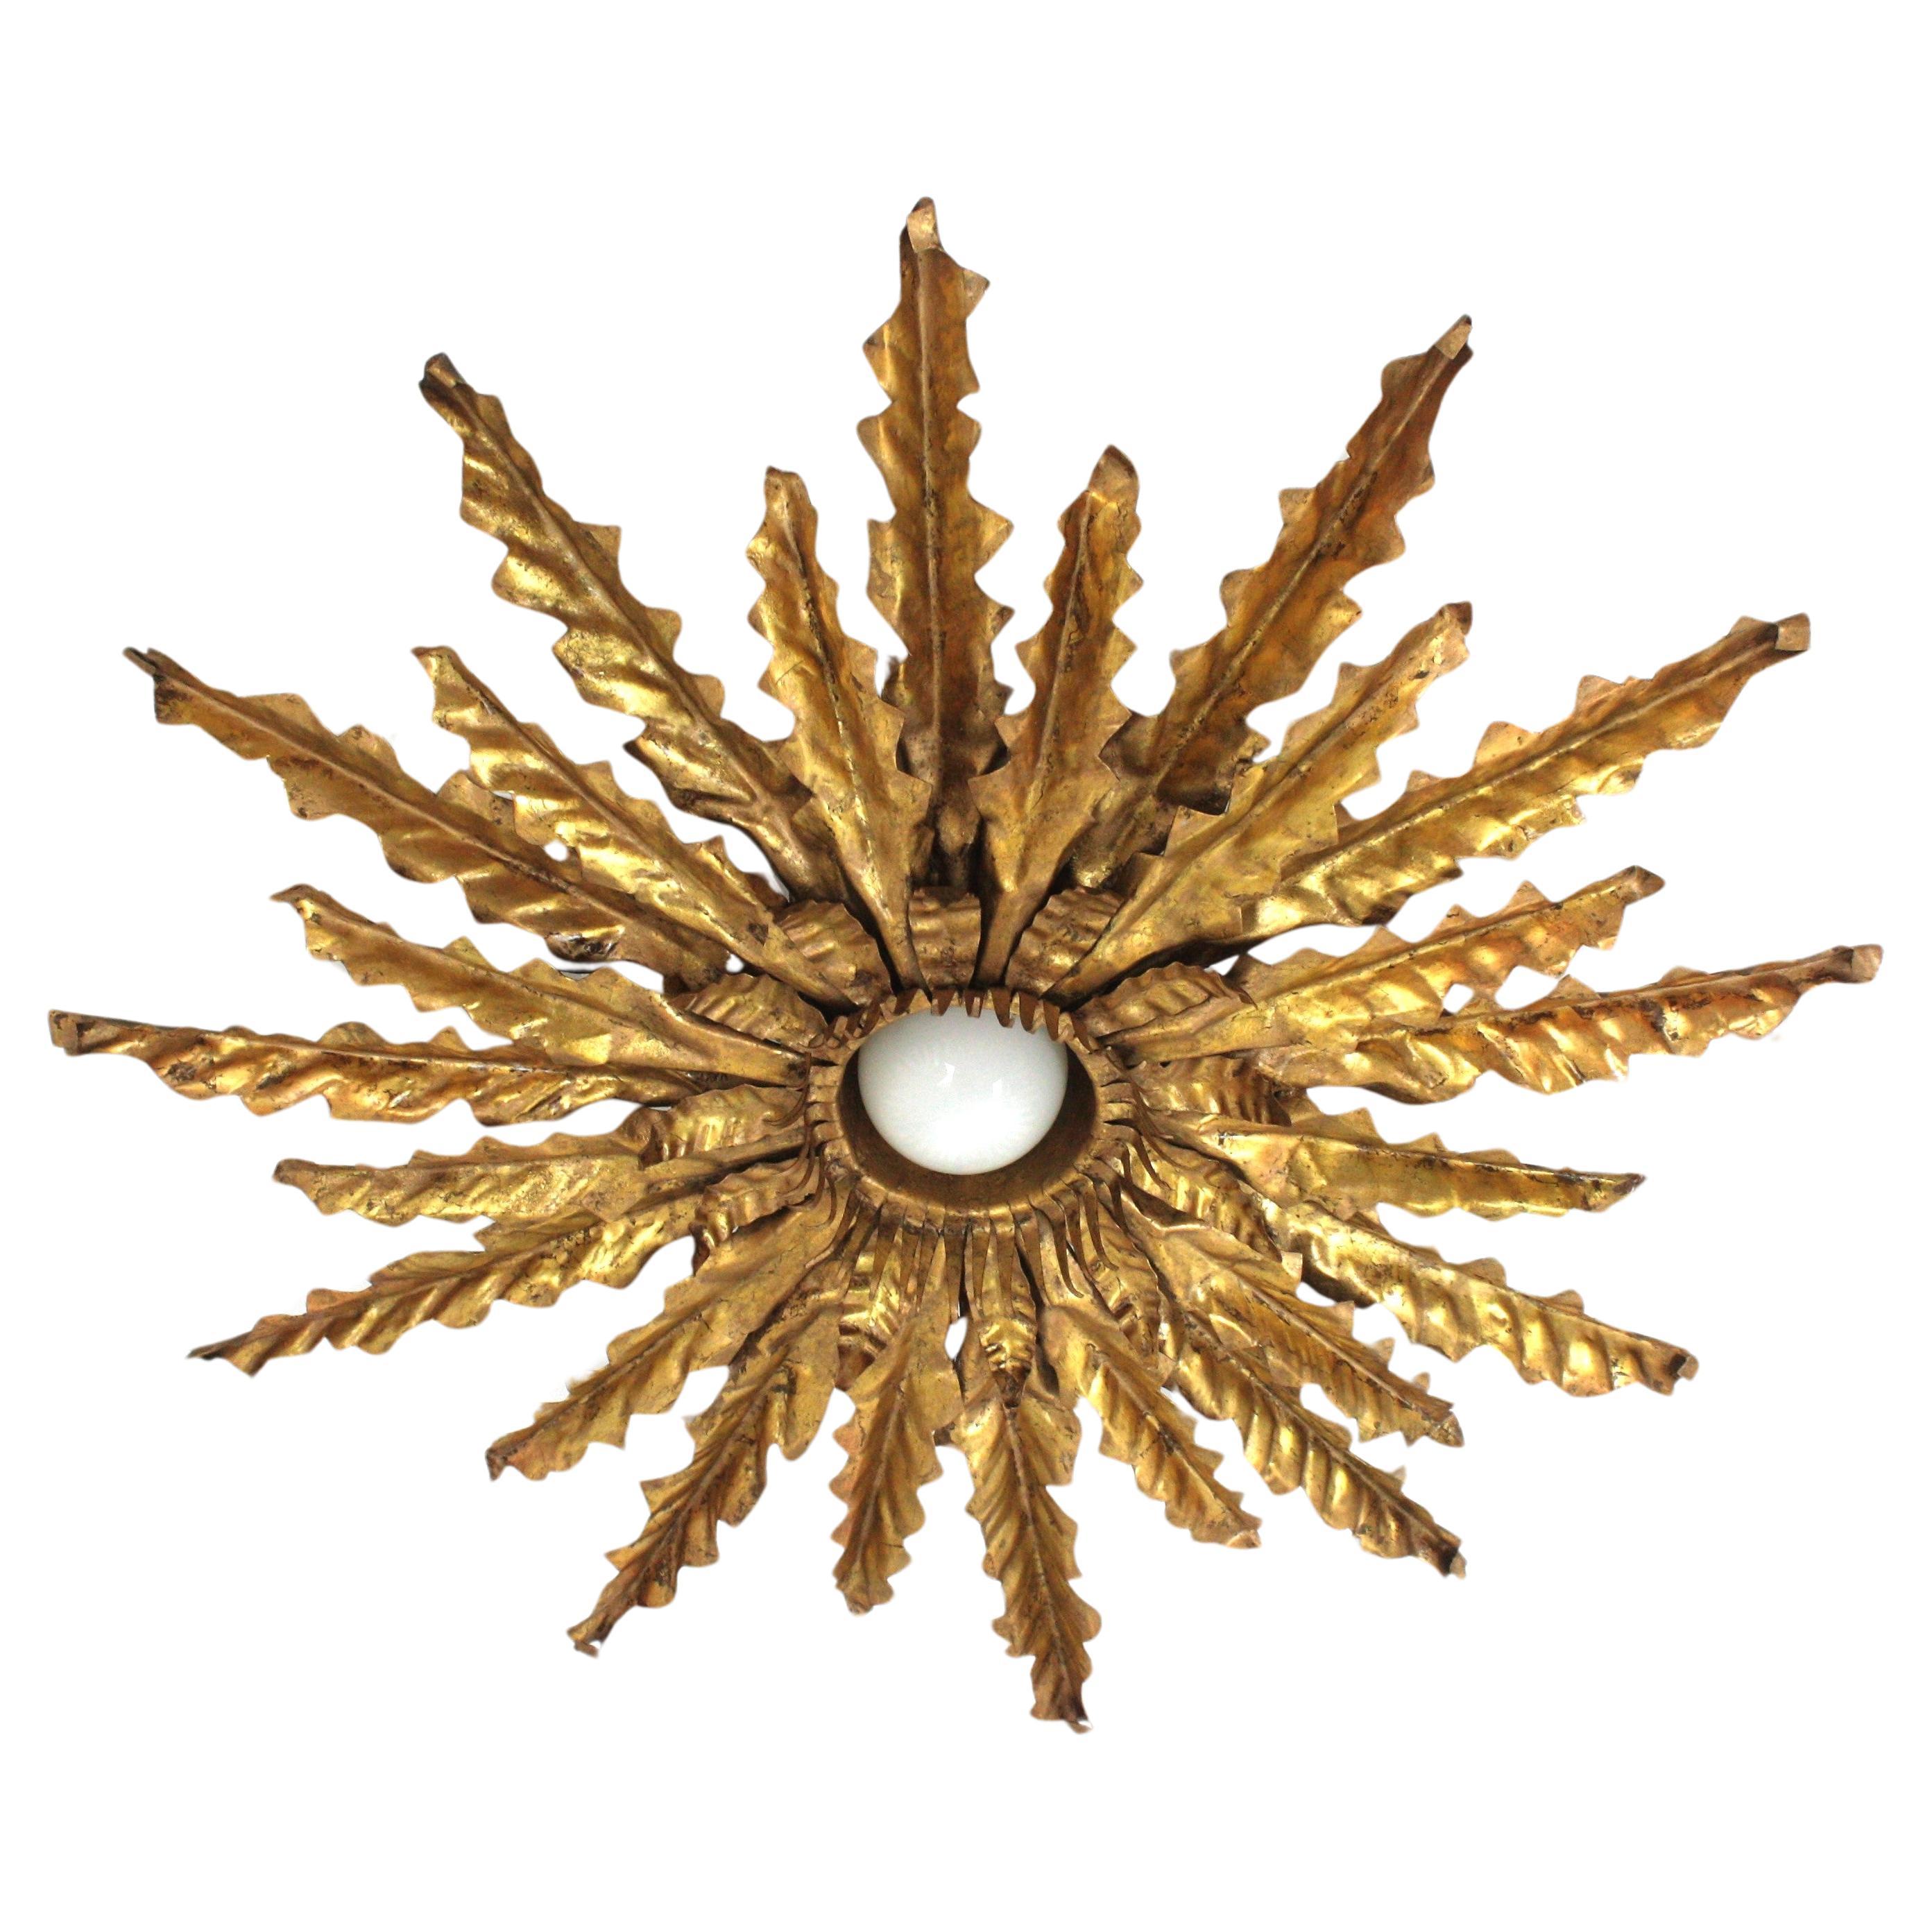 Spanish Sunburst Leafed Ceiling Light Fixture or Pendant, Gilt Iron